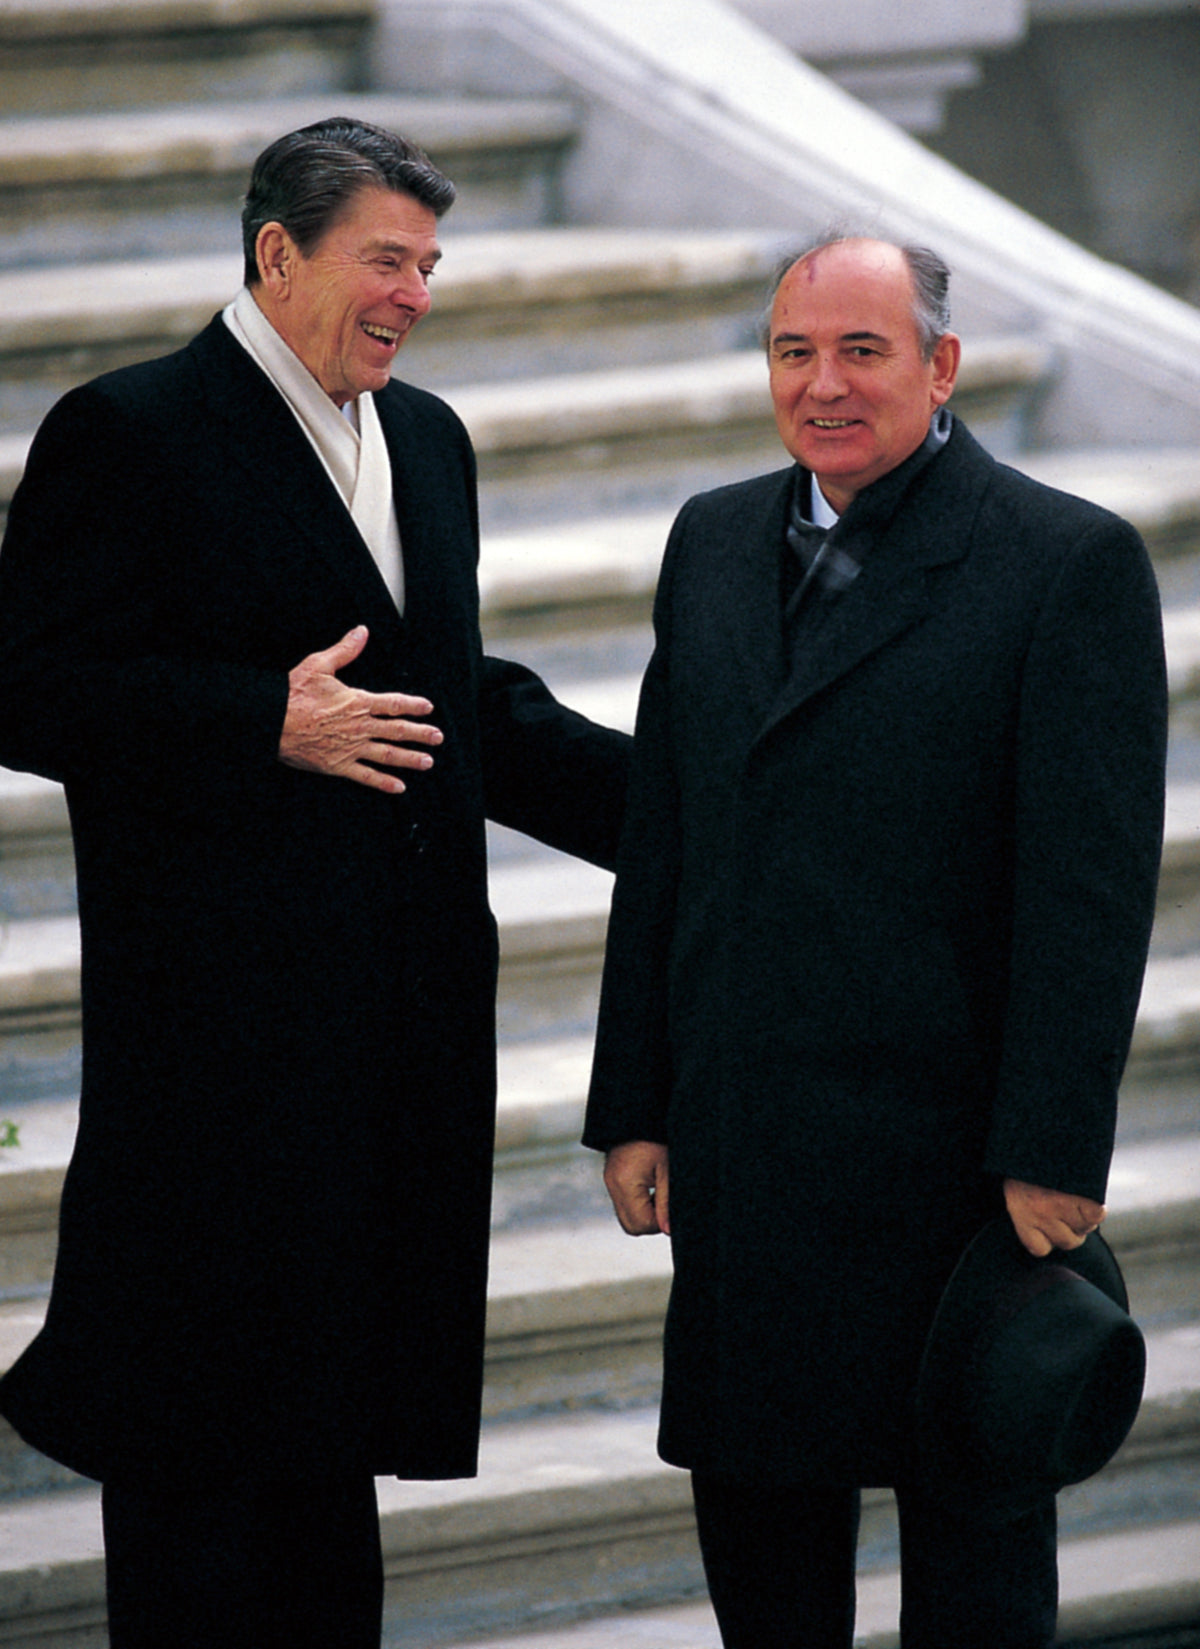 Ronald Reagan and Mikhail Gorbachev, 1985 Geneva Summit